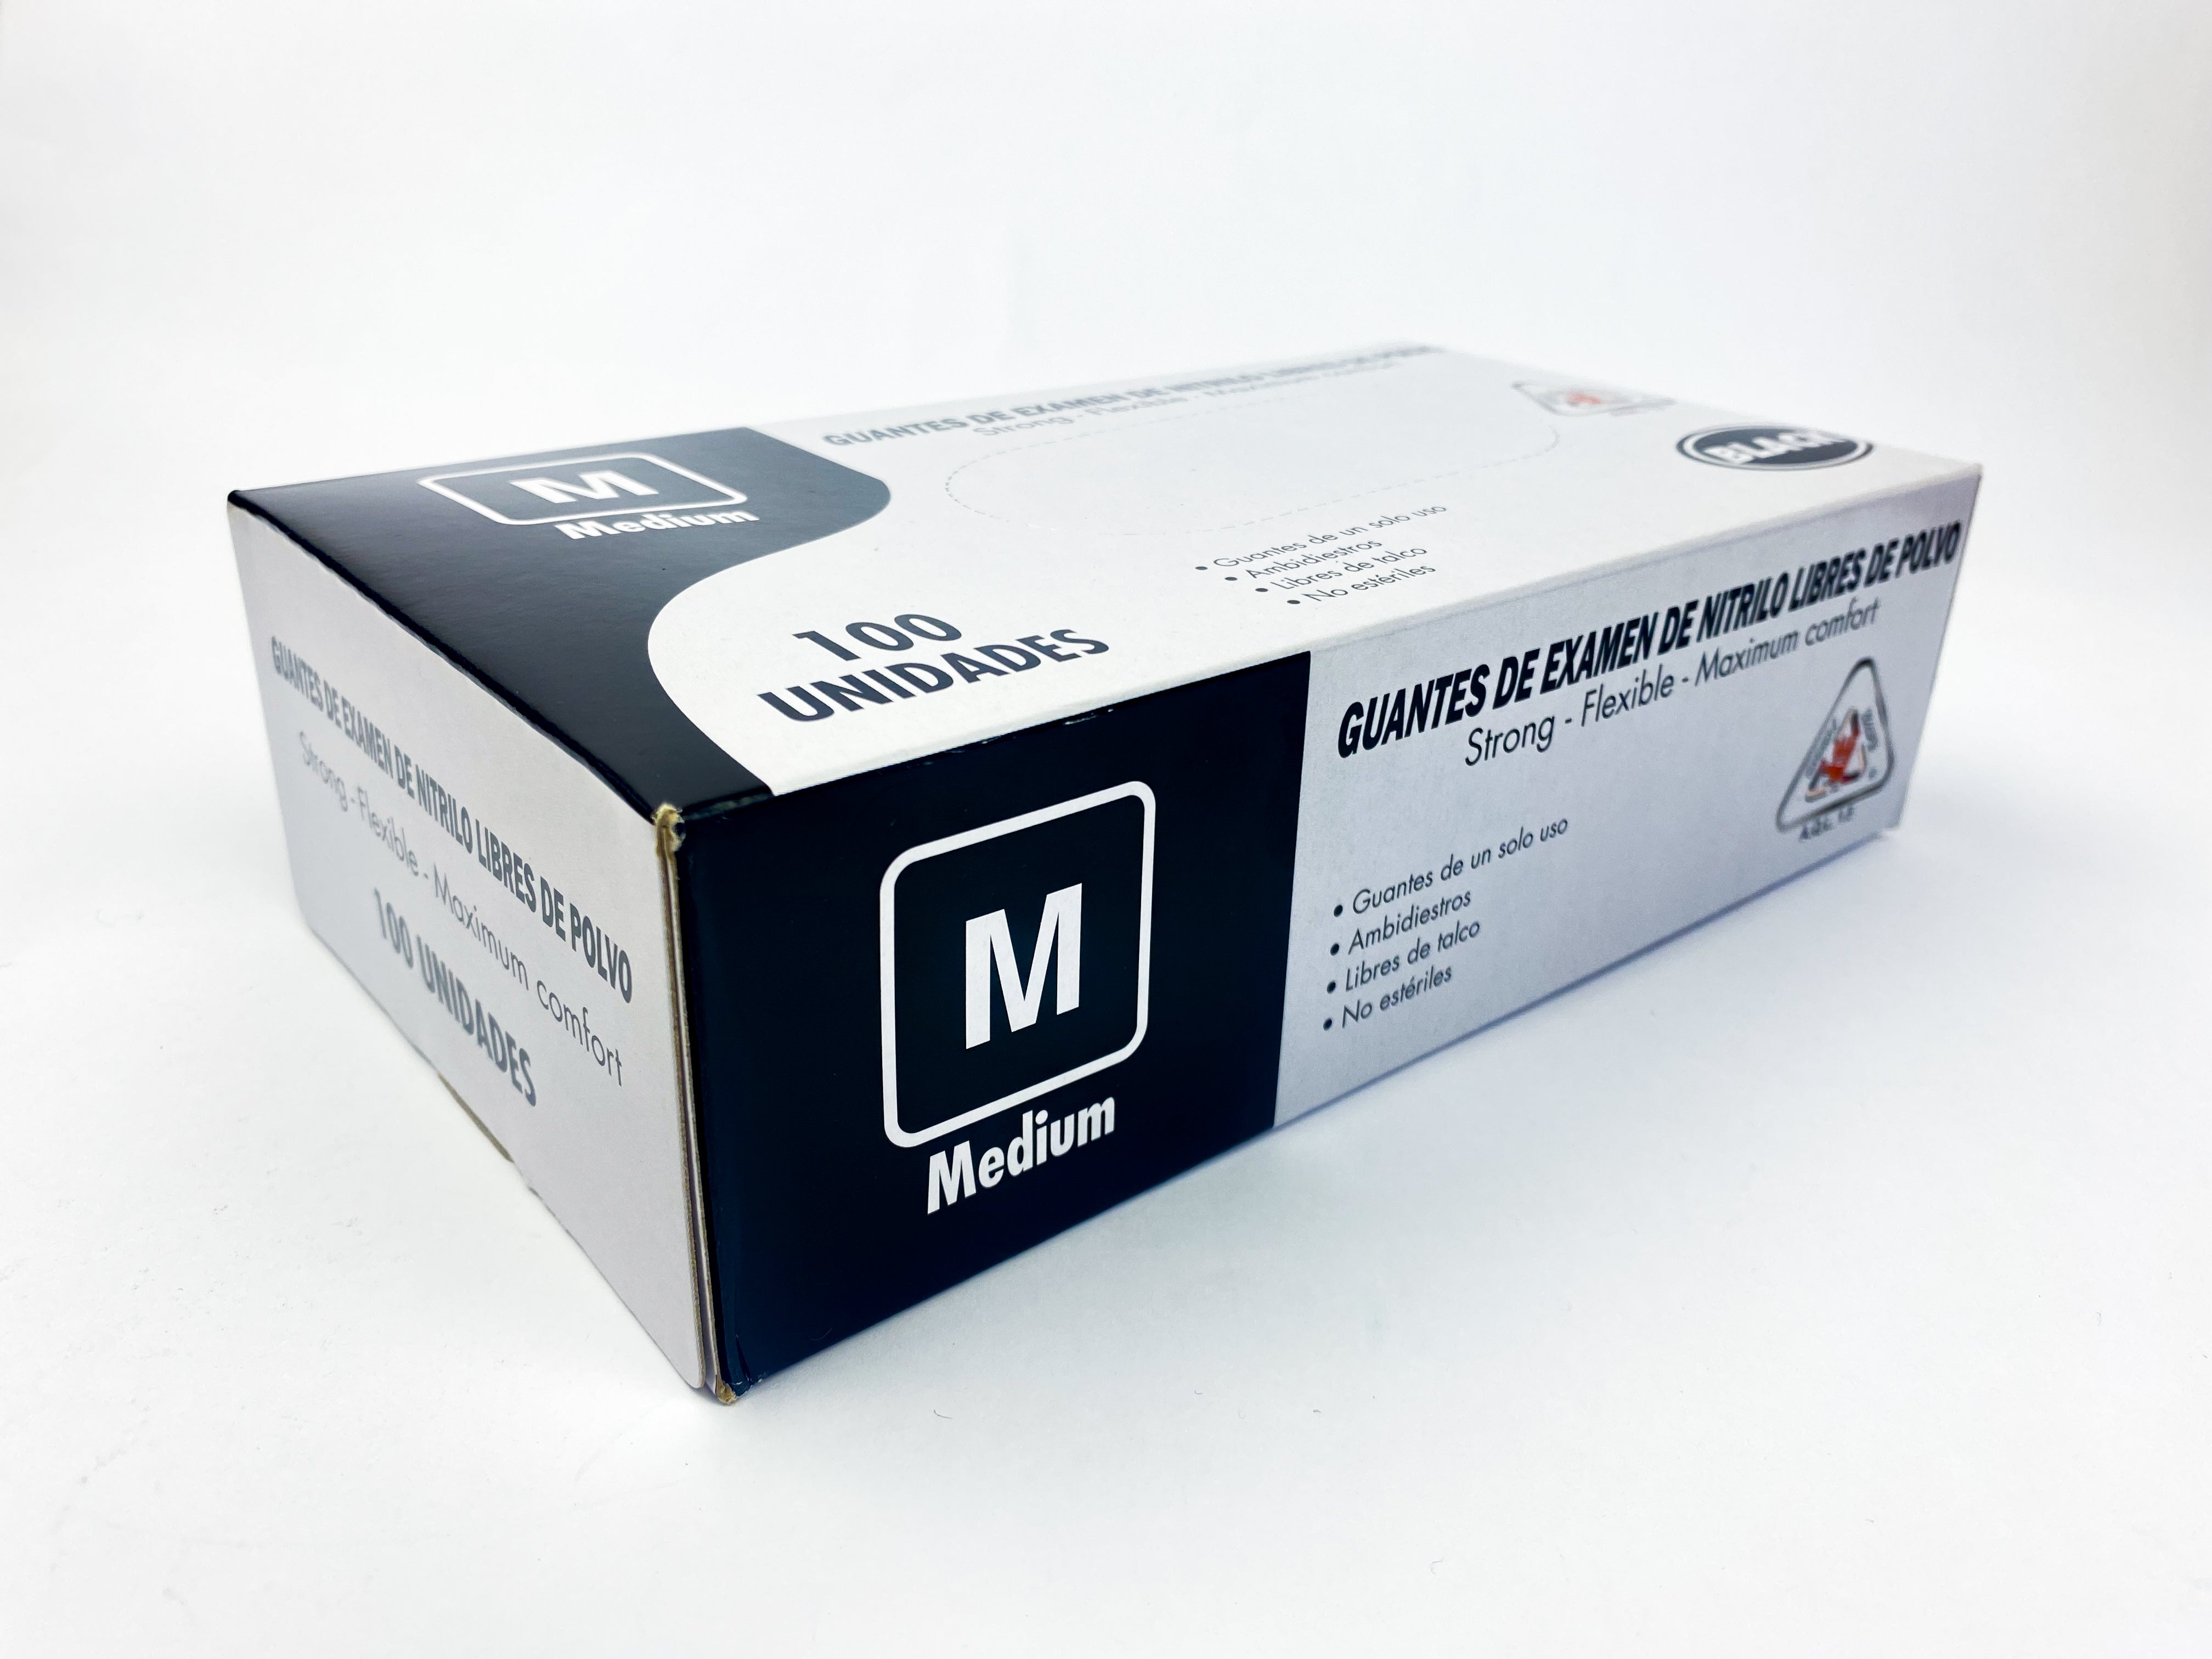 Guantes de nitrilo negro - Caja x 100 unidades - Jelt